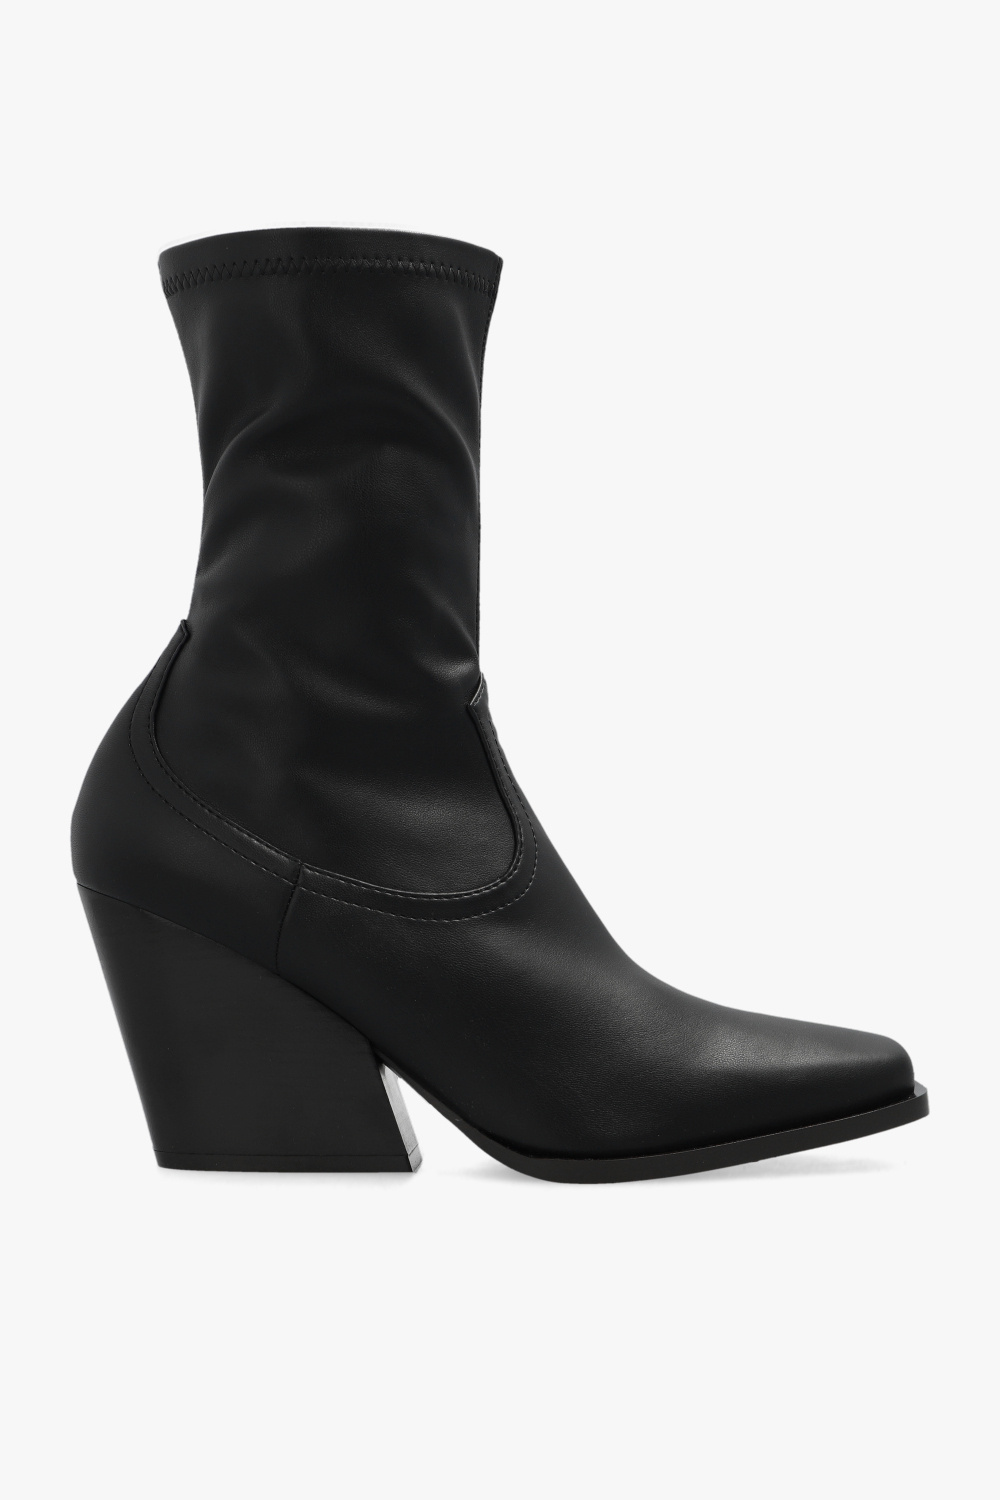 Stella McCartney ‘Cowboy’ heeled ankle boots